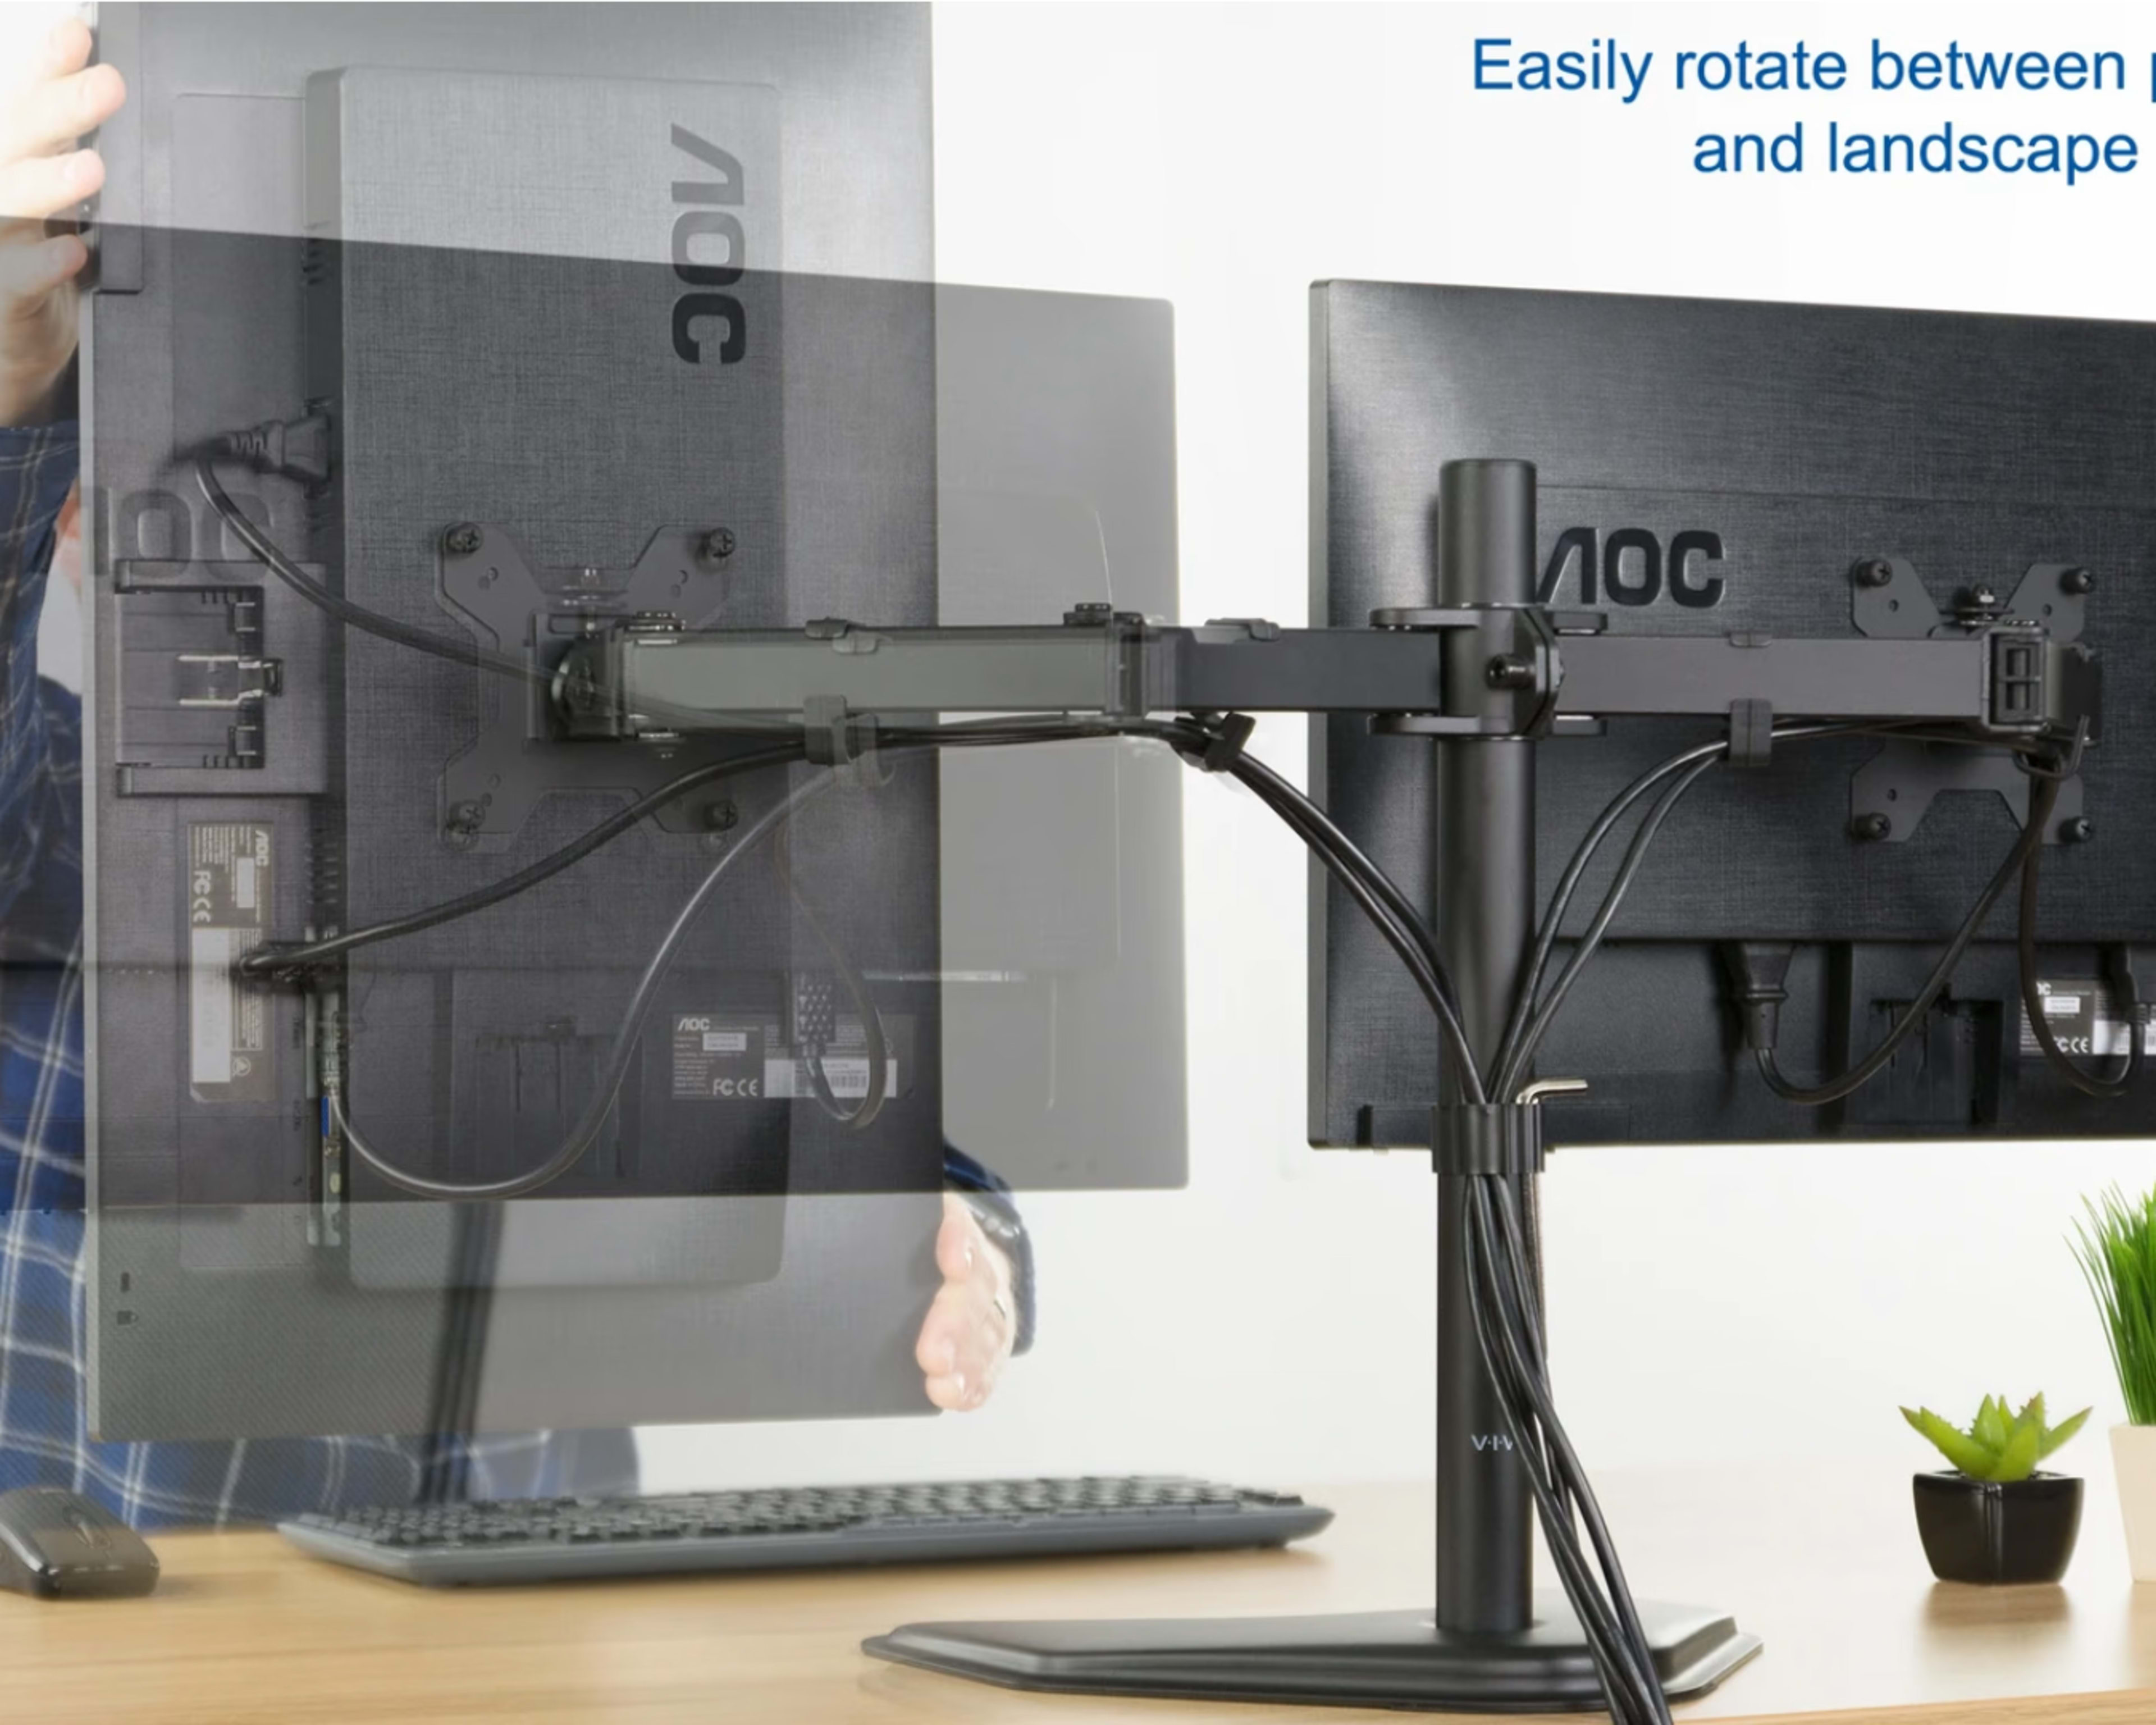 VIVO Dual Monitor Free-Standing Desk Stand